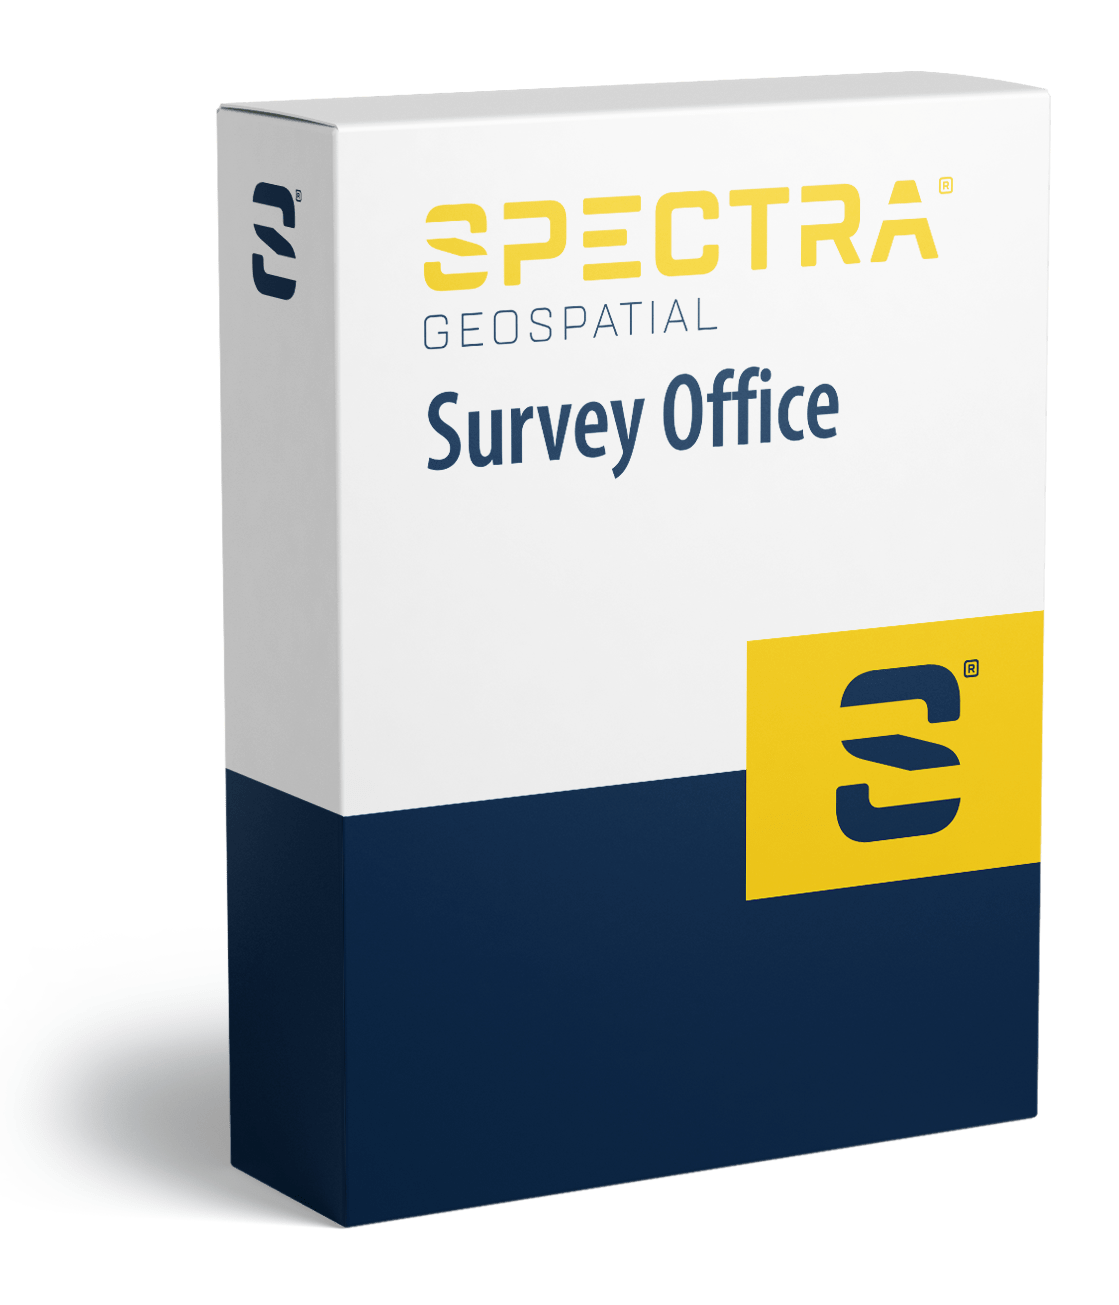 Spectra Geospatial Survey Office